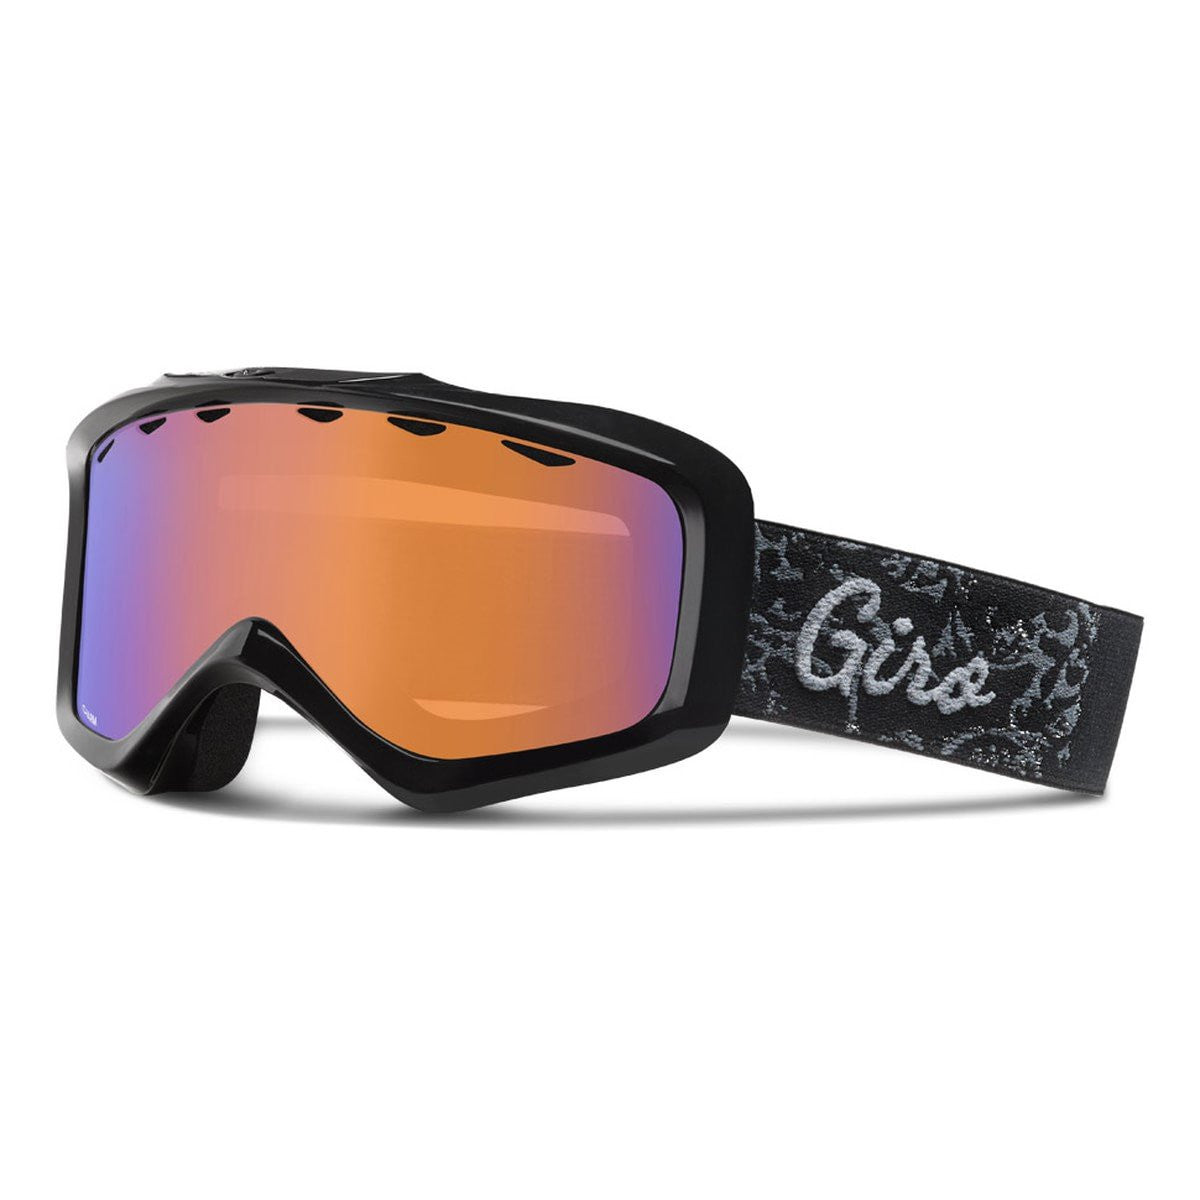 Giro Women's Charm Snow Goggle - Openbox Black Filigree Persimmon Boost - Giro Snow Snow Goggles